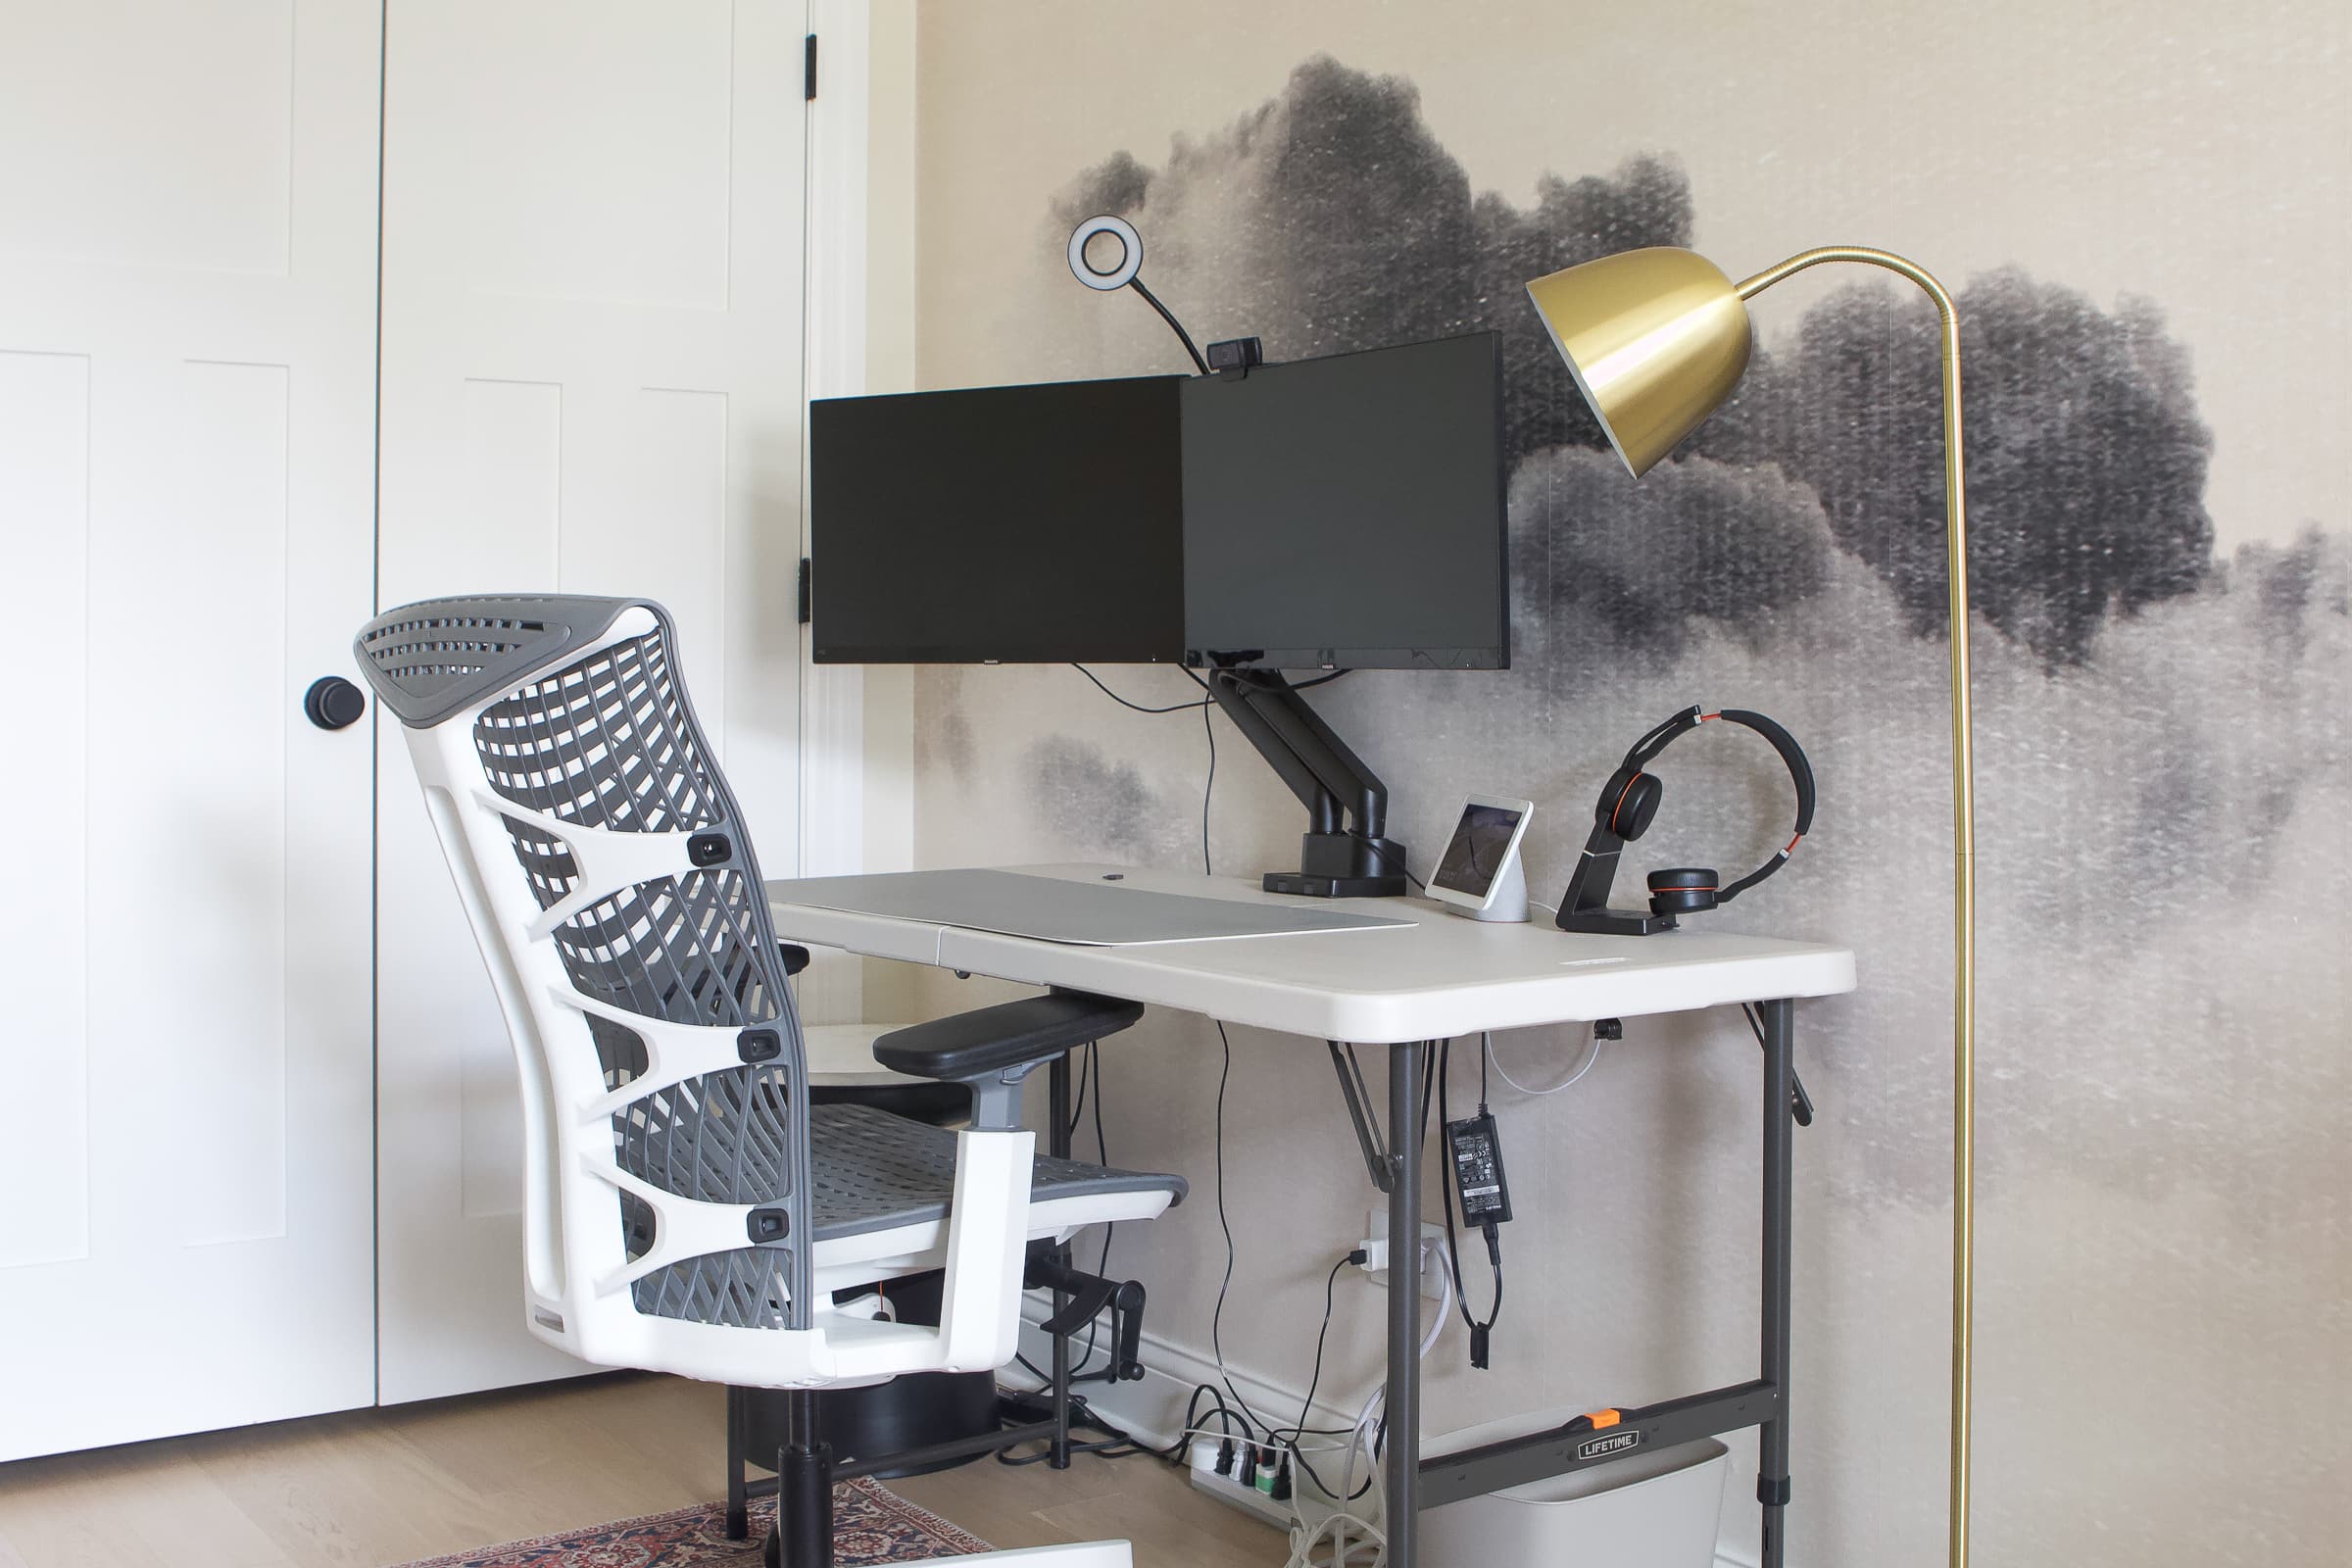 finn's new temporary home office setup 